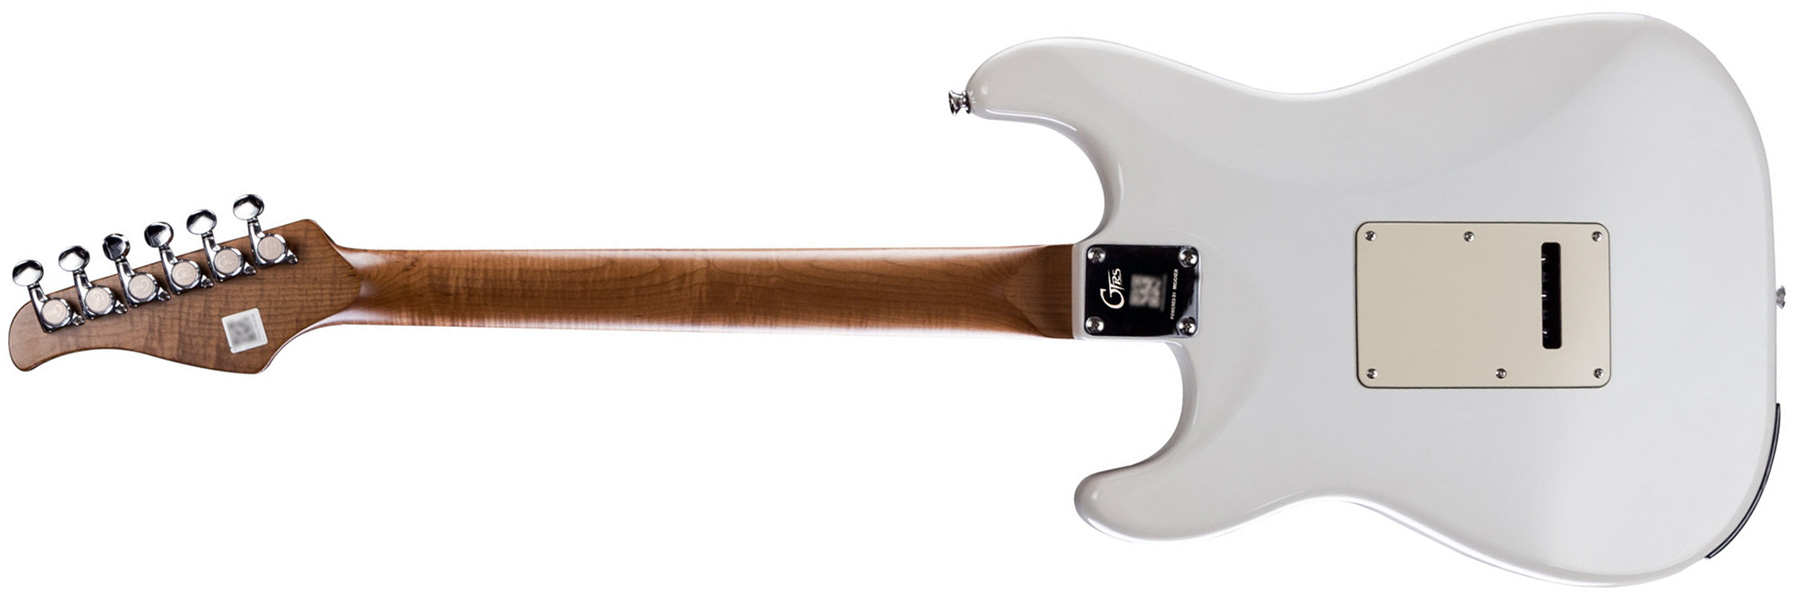 Mooer Gtrs P800 Pro Intelligent Guitar Hss Trem Rw - Olympic White - Guitarra eléctrica de modelización - Variation 1